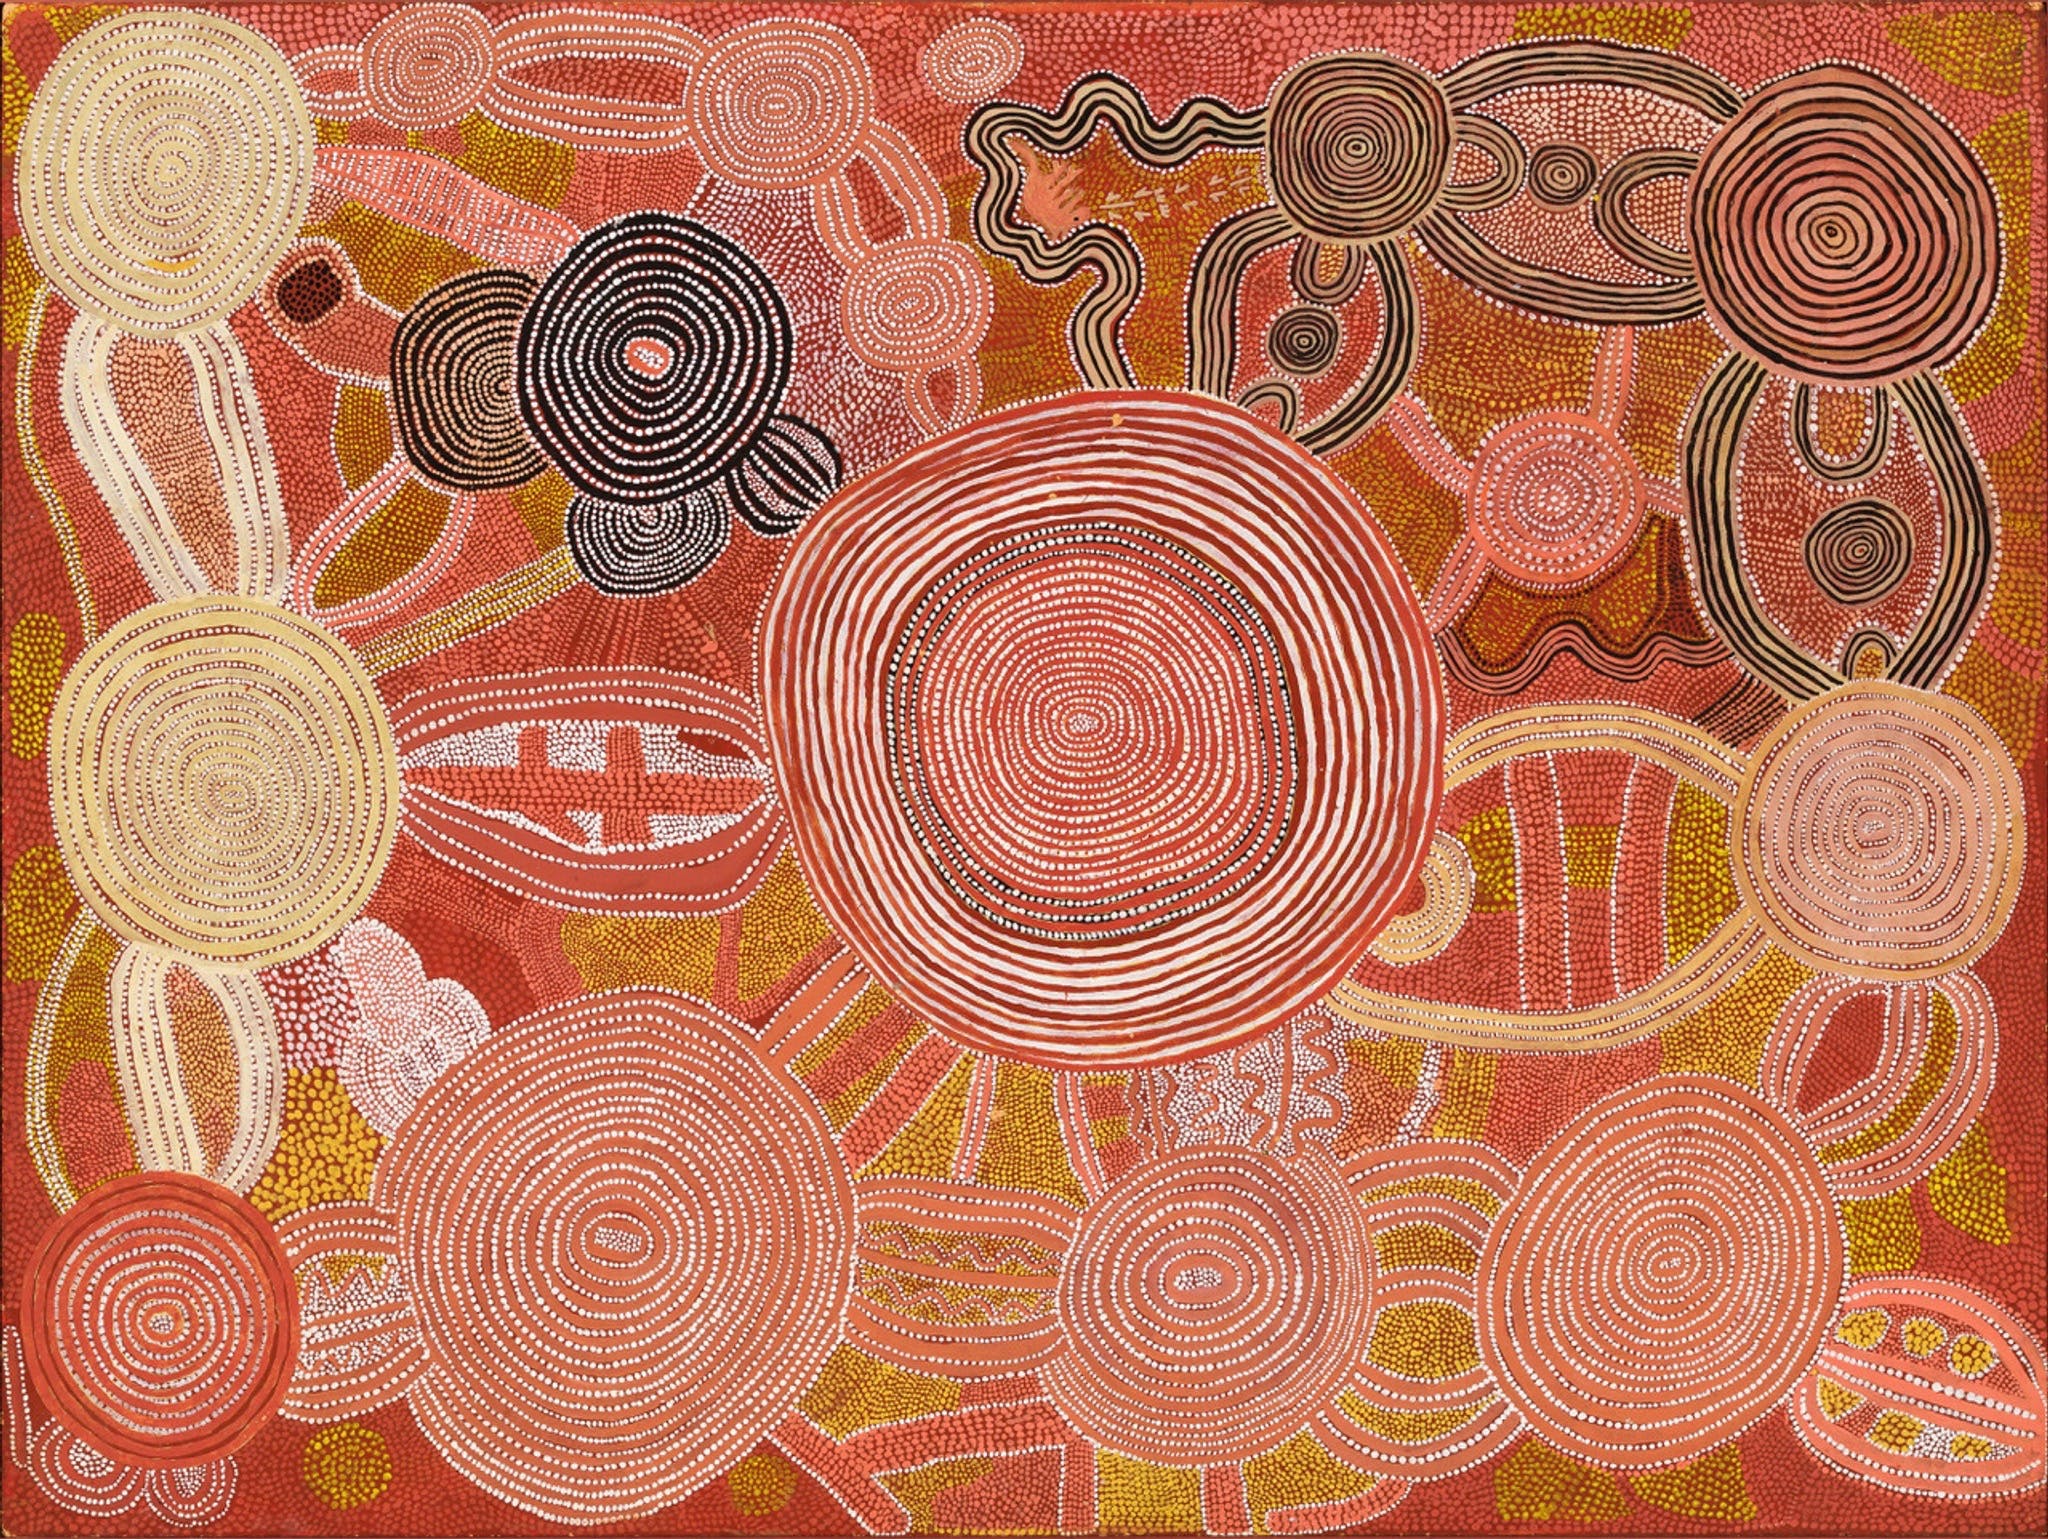 Reverence Exhibition of Australian Indigenous Art - WA Accommodation